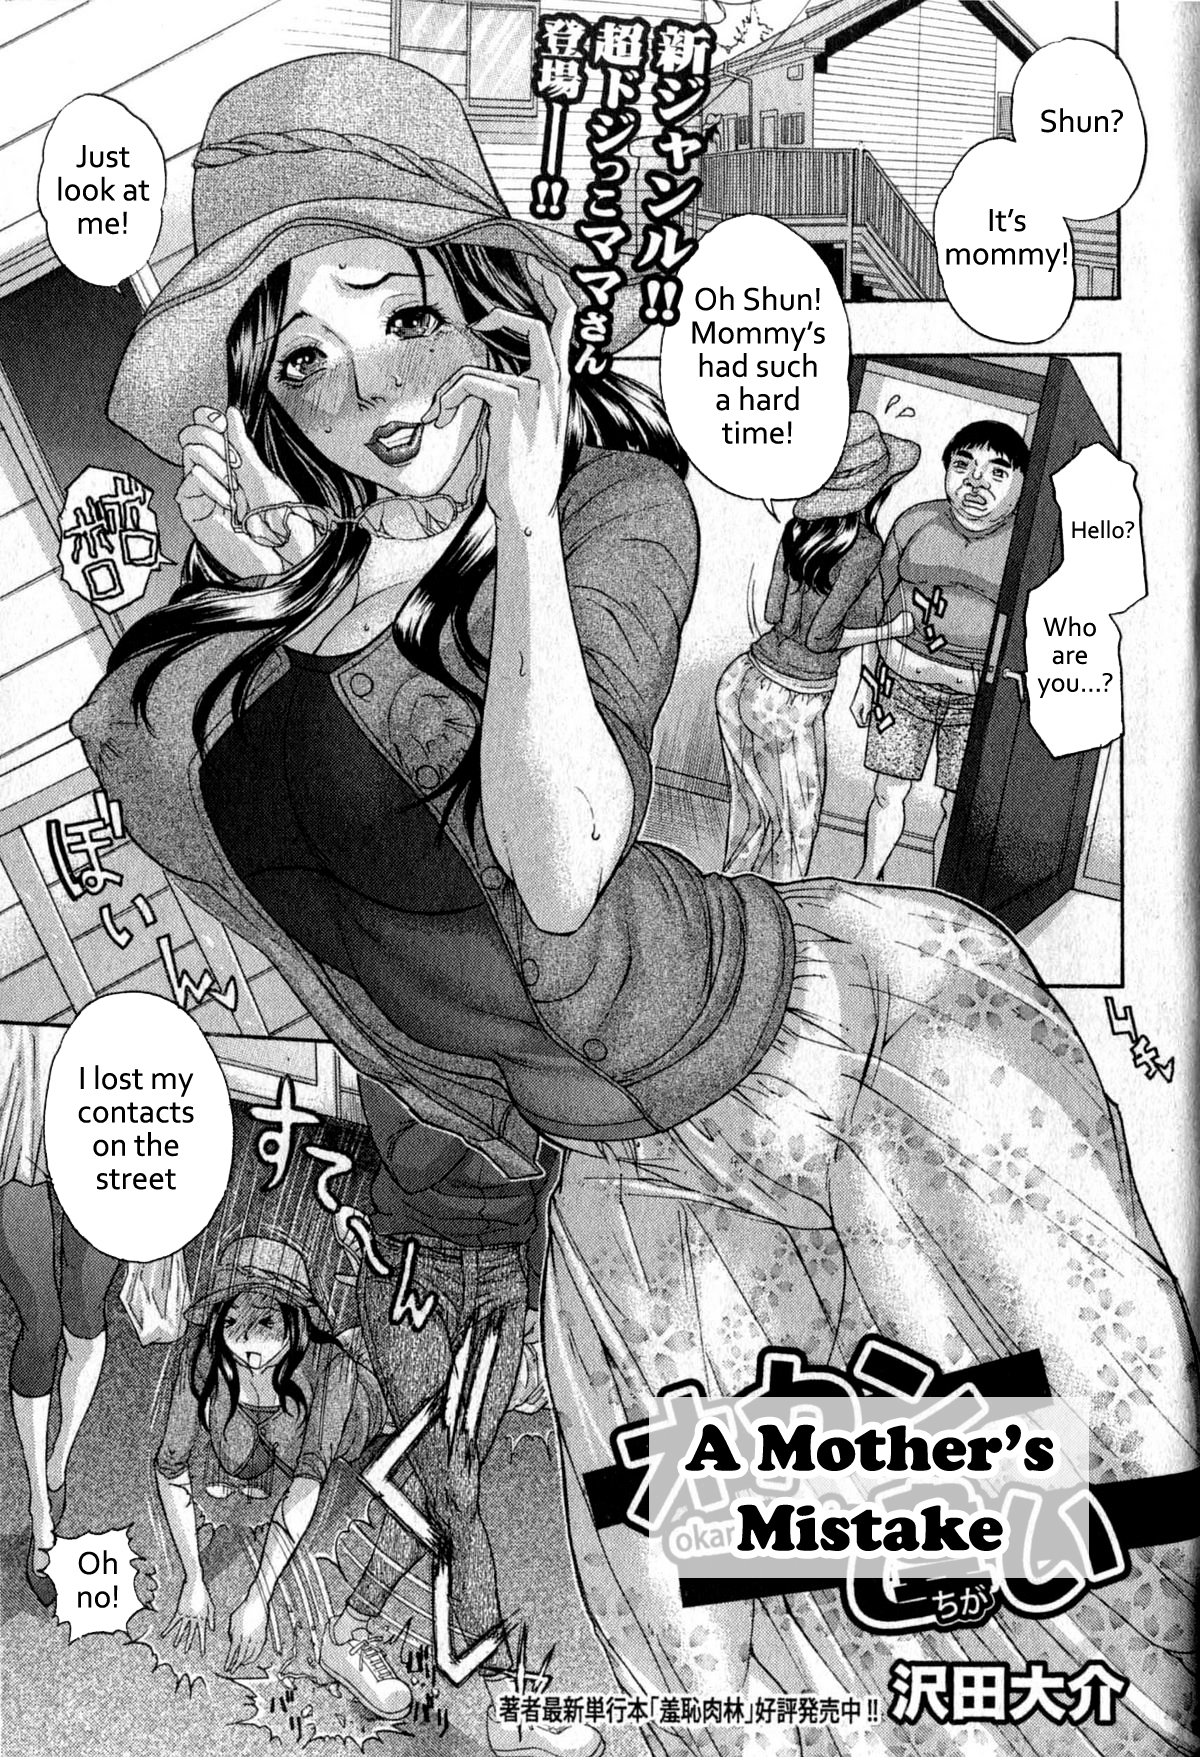 SAWADA DAISUKE – A MOTHER’S MISTAKE